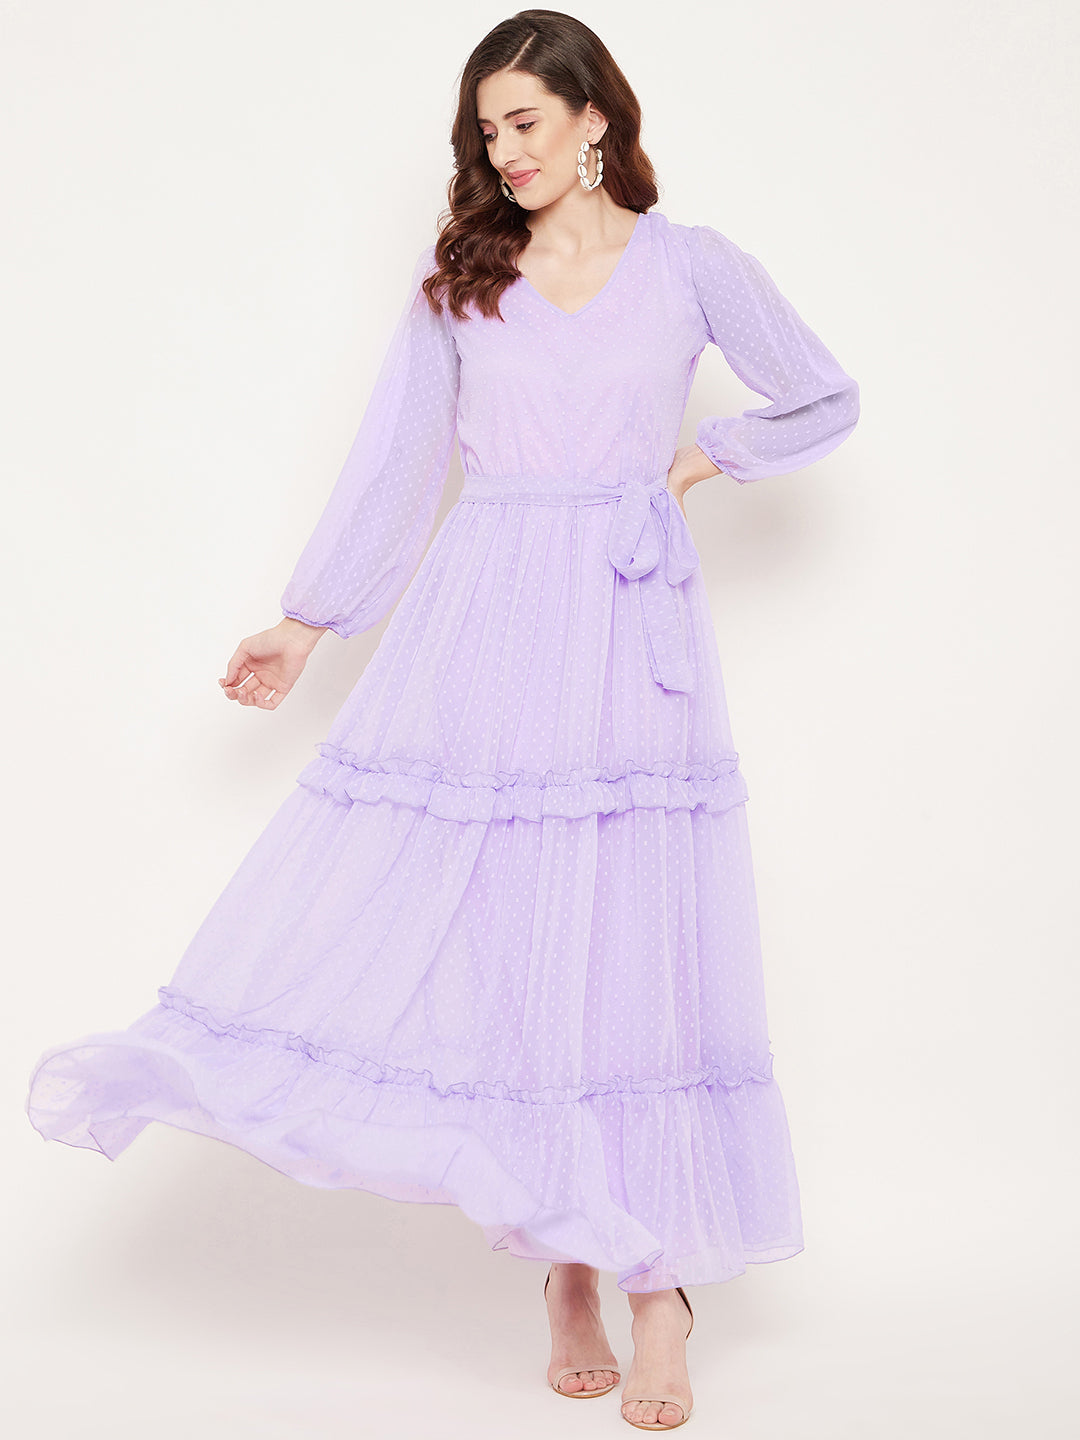 chiffon dresses . Muslim dress. Maxi dress.women abaya long sleeves floral  dress | eBay